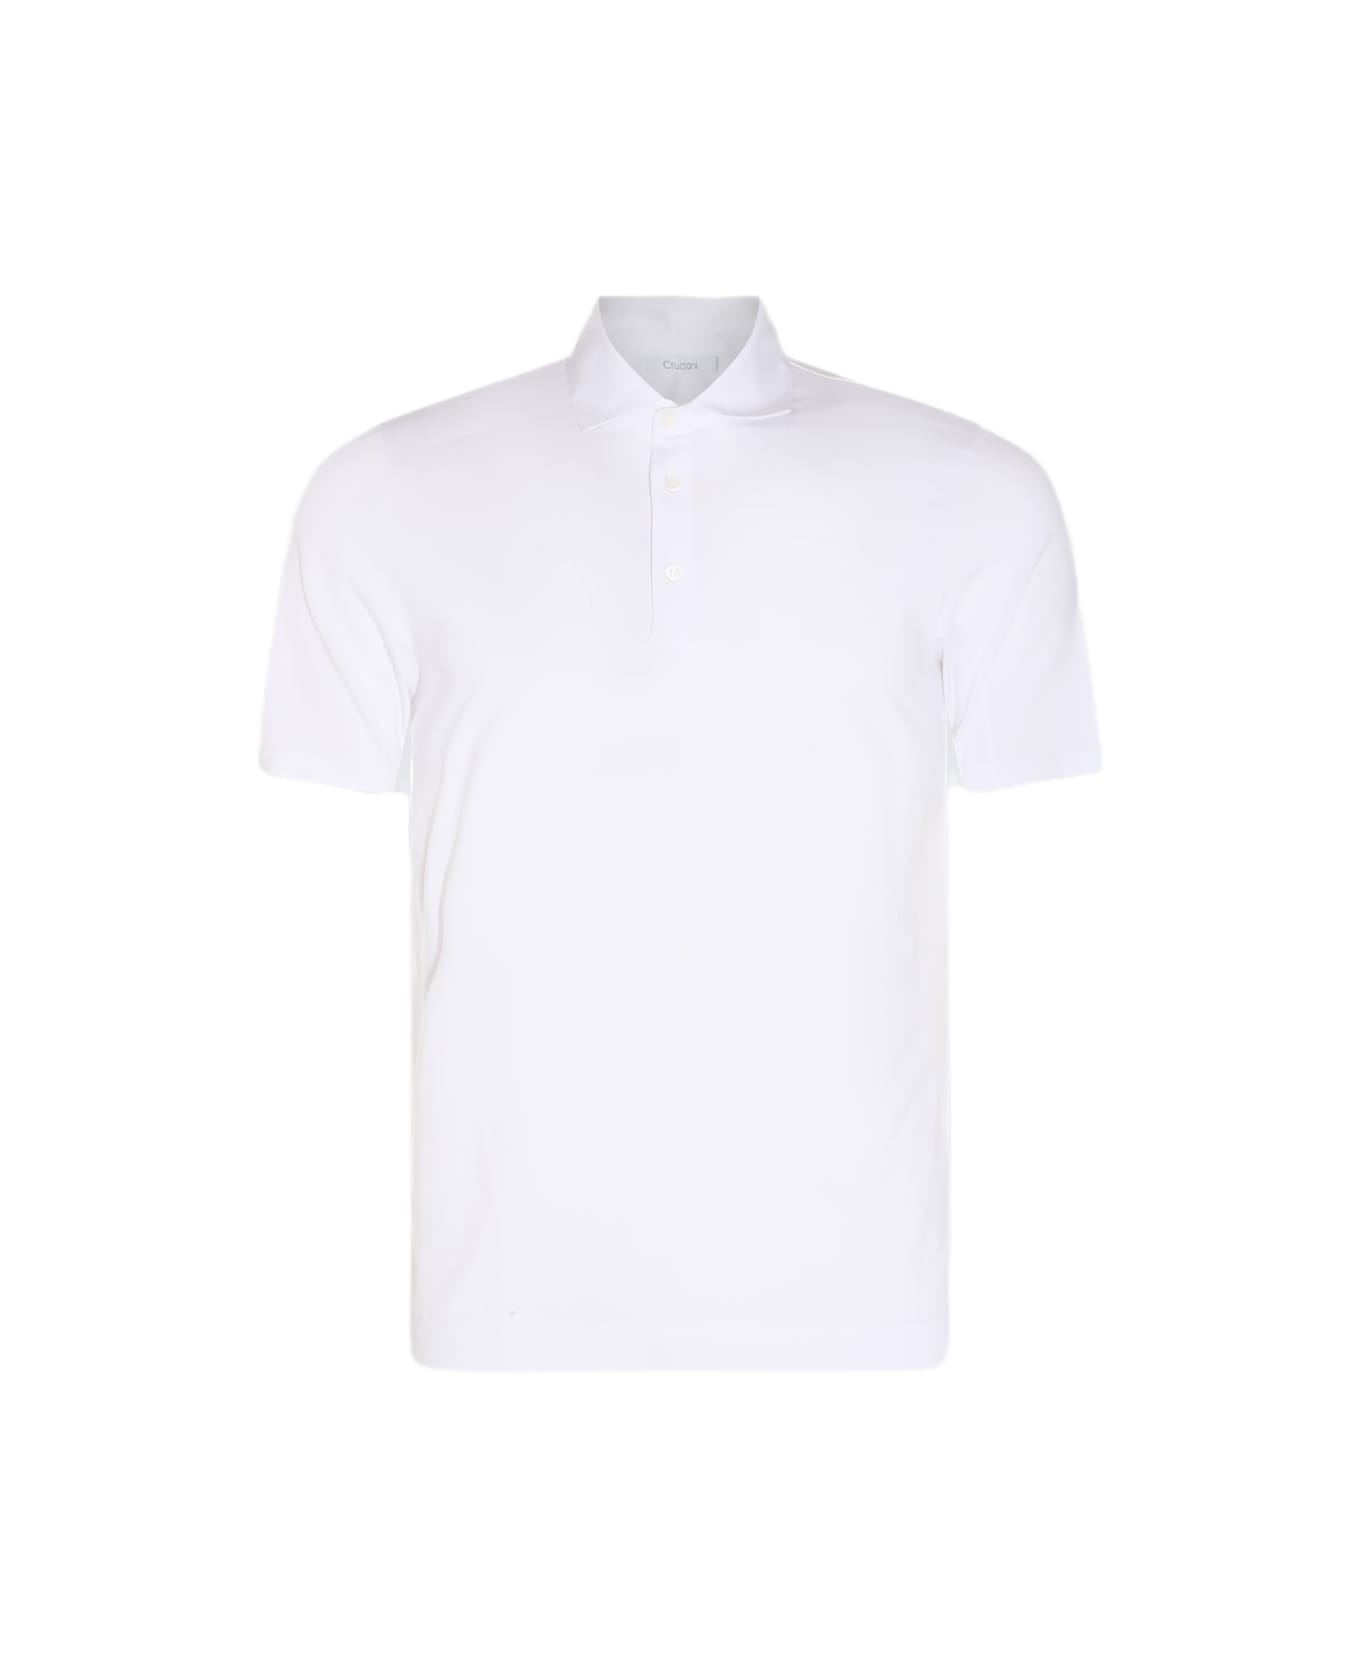 Cruciani White Cotton Polo Shirt - White ポロシャツ